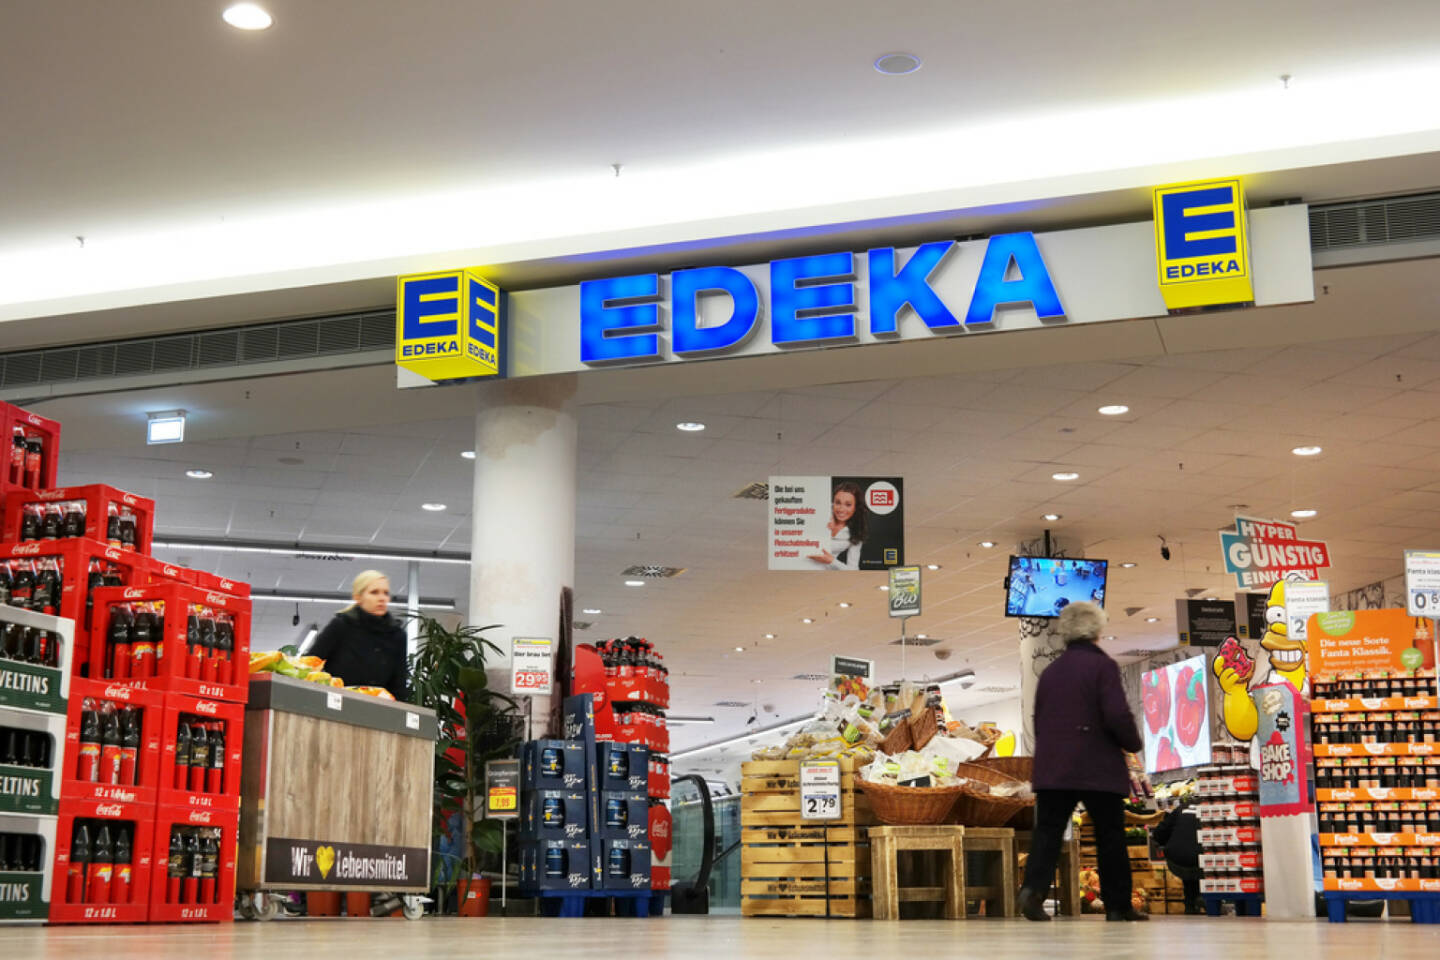 Edeka, http://www.shutterstock.com/de/pic-285432560/stock-photo-meppen-germany-february-edeka-supermarket-in-a-shopping-mall-in-meppen-the-edeka-group-is.html